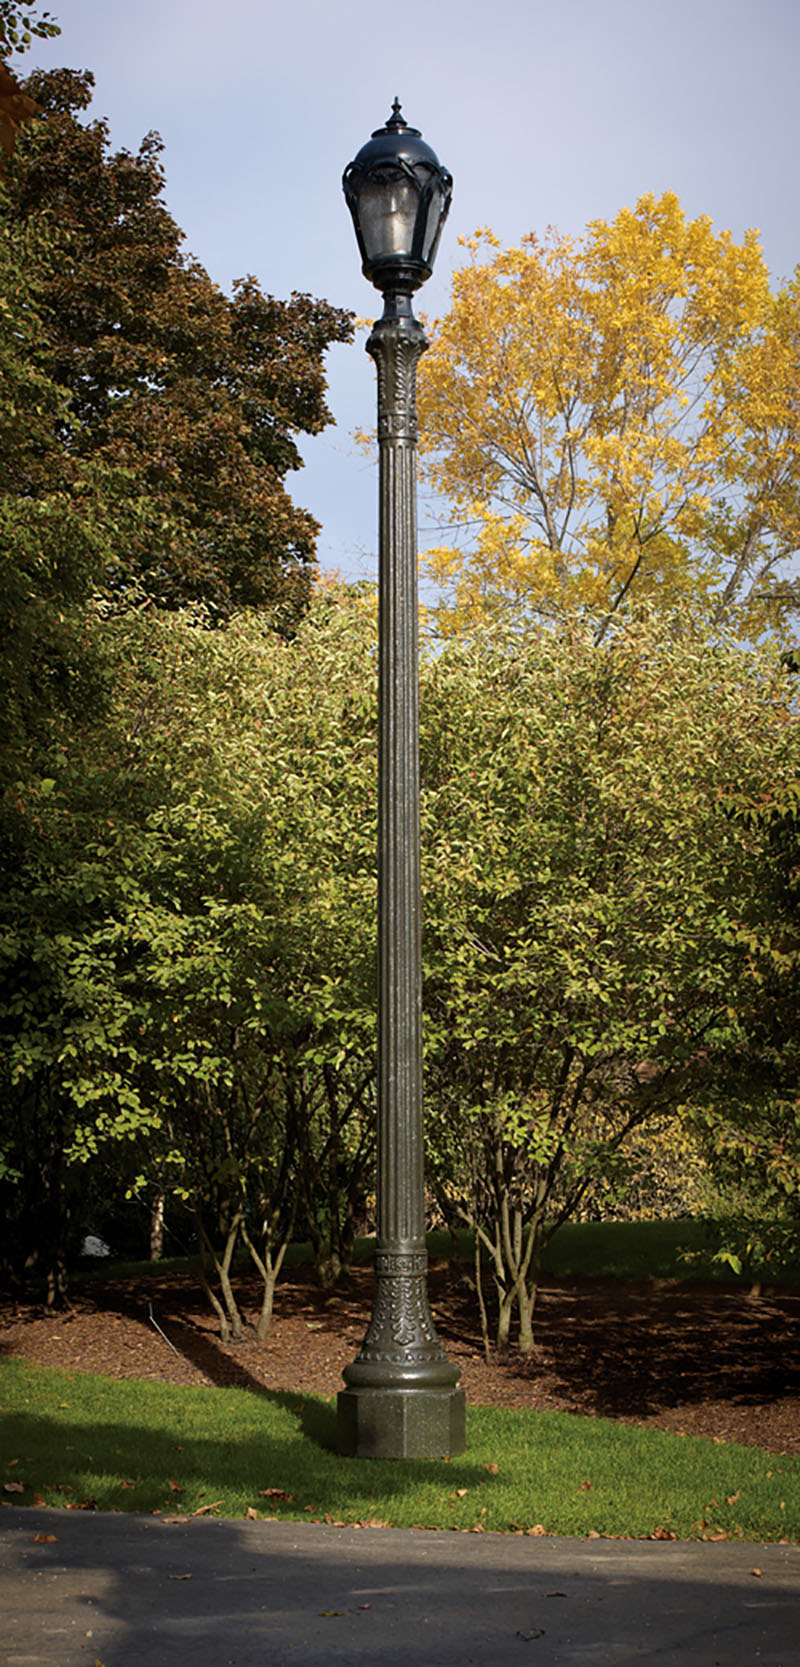 The California Prestressed Spun Concrete Pole Installation Photo in a Park